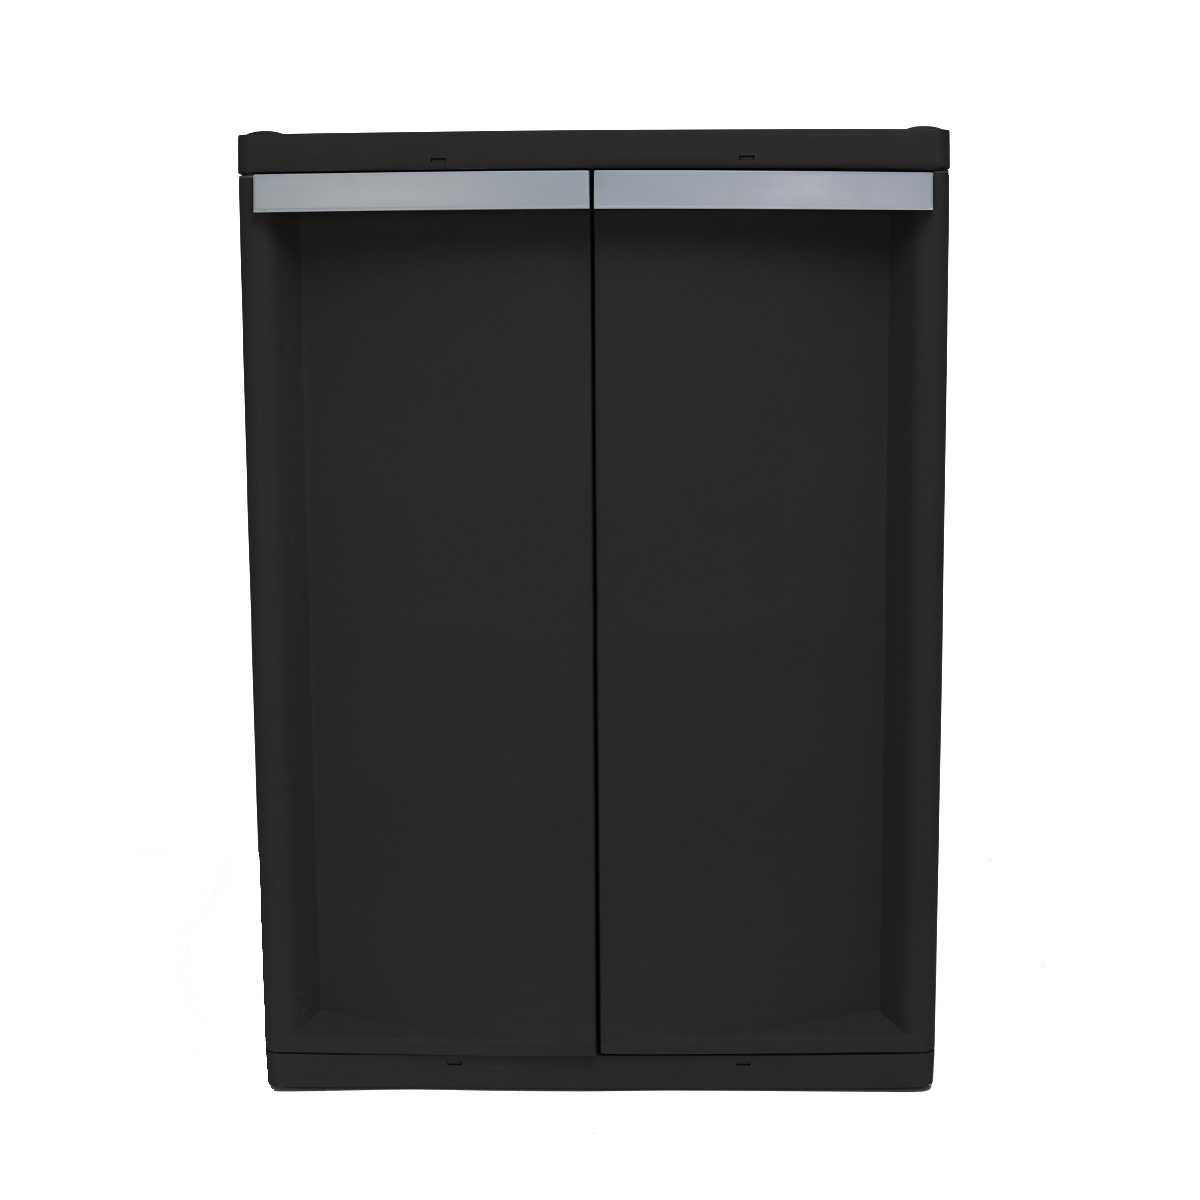 Hyper Tough 2 Shelf Plastic Garage Storage Cabinet 18.5Dx25.47Wx35.43"H, Black - image 1 of 9